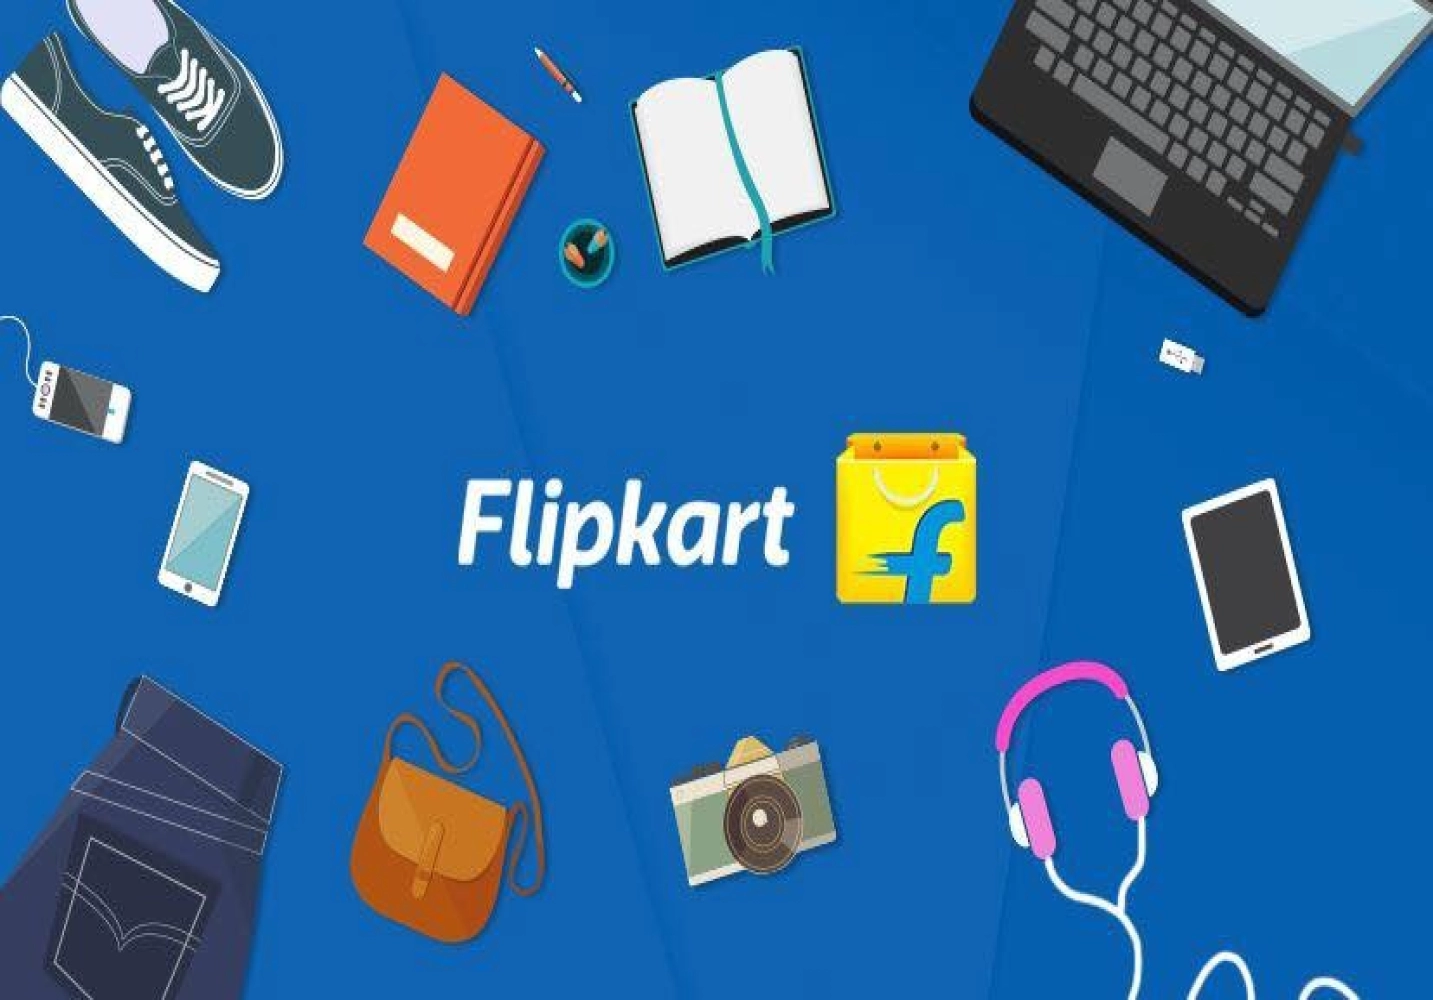 Flipkart Big Savings Days 2021 Sale - Get Best Offers for Mobiles & Electronics